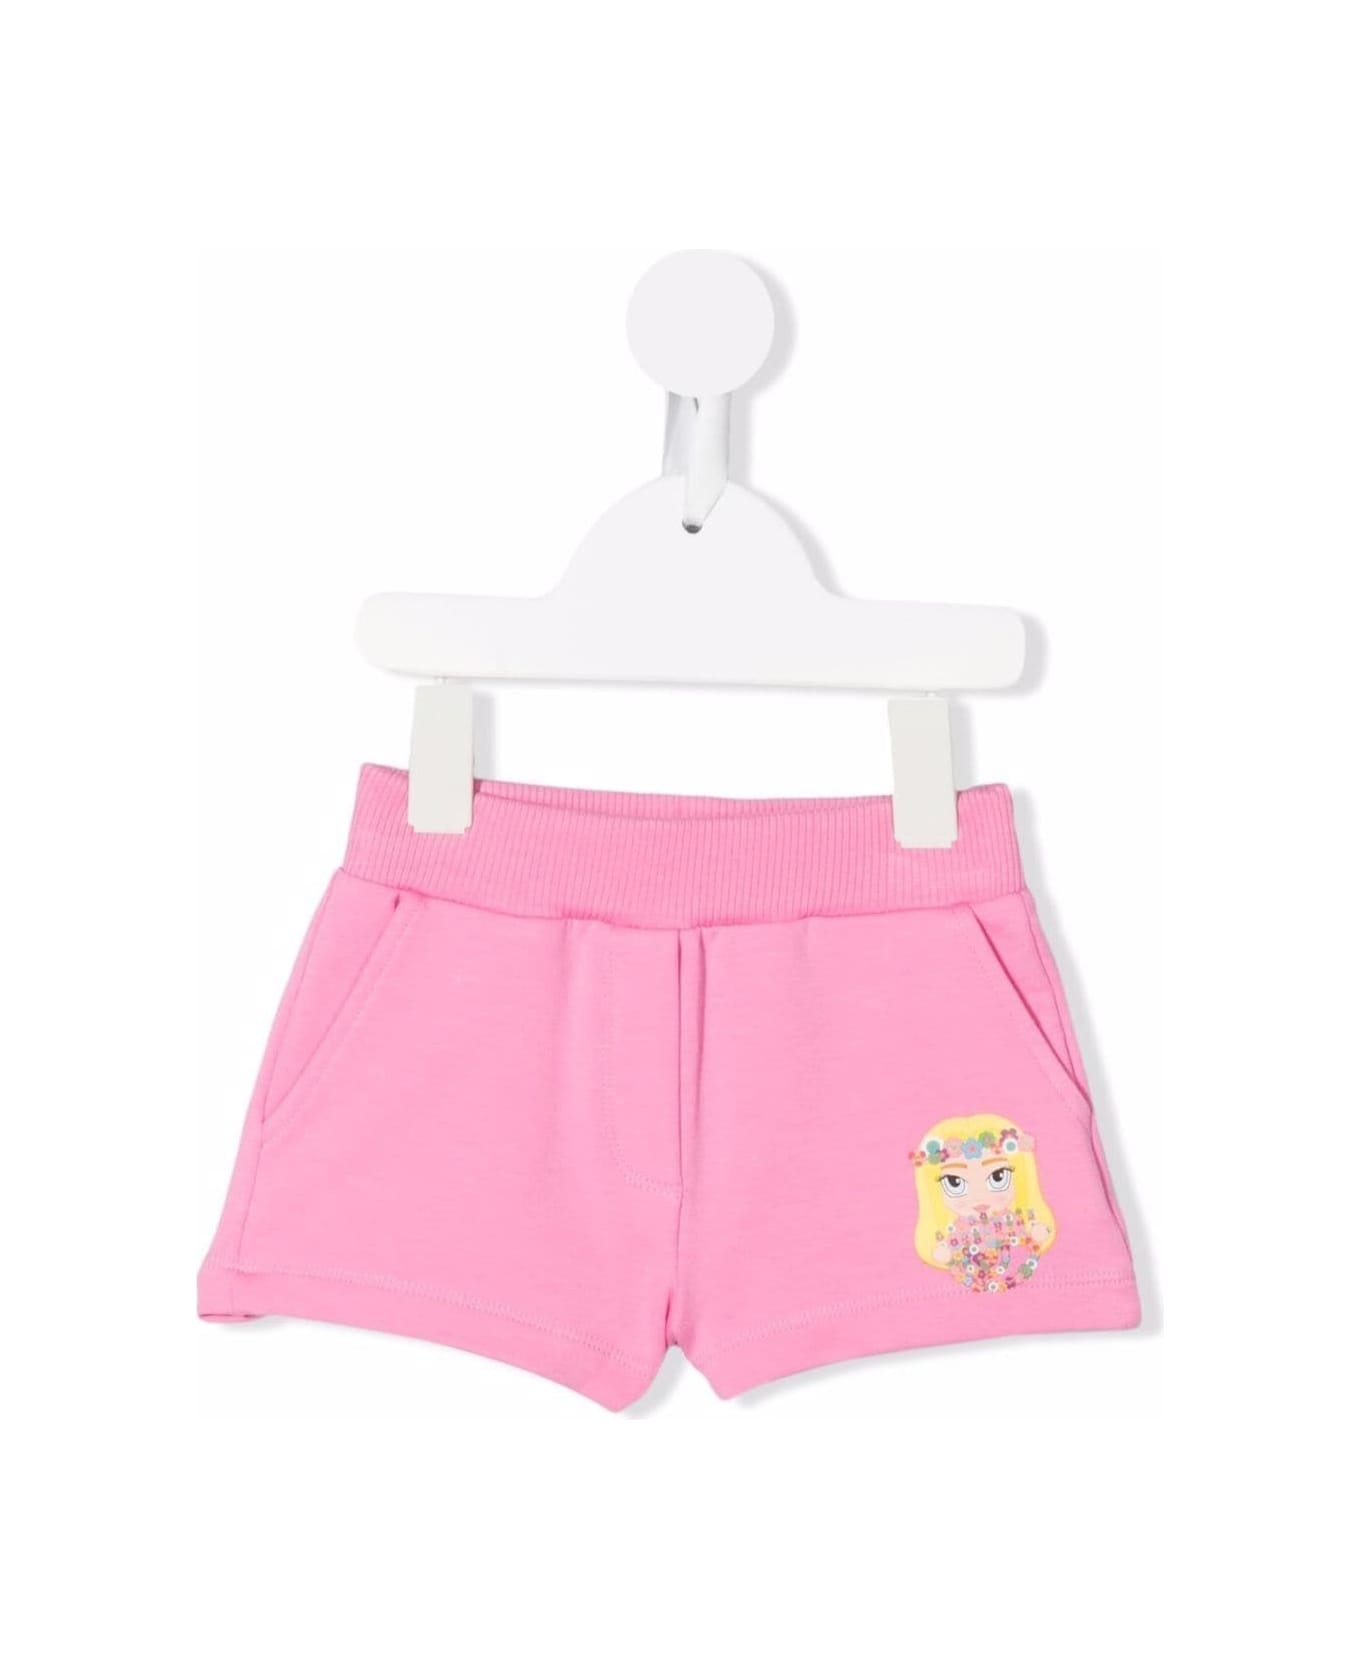 Chiara Ferragni Pink Cotton Shorts With Mascot Print - Pink